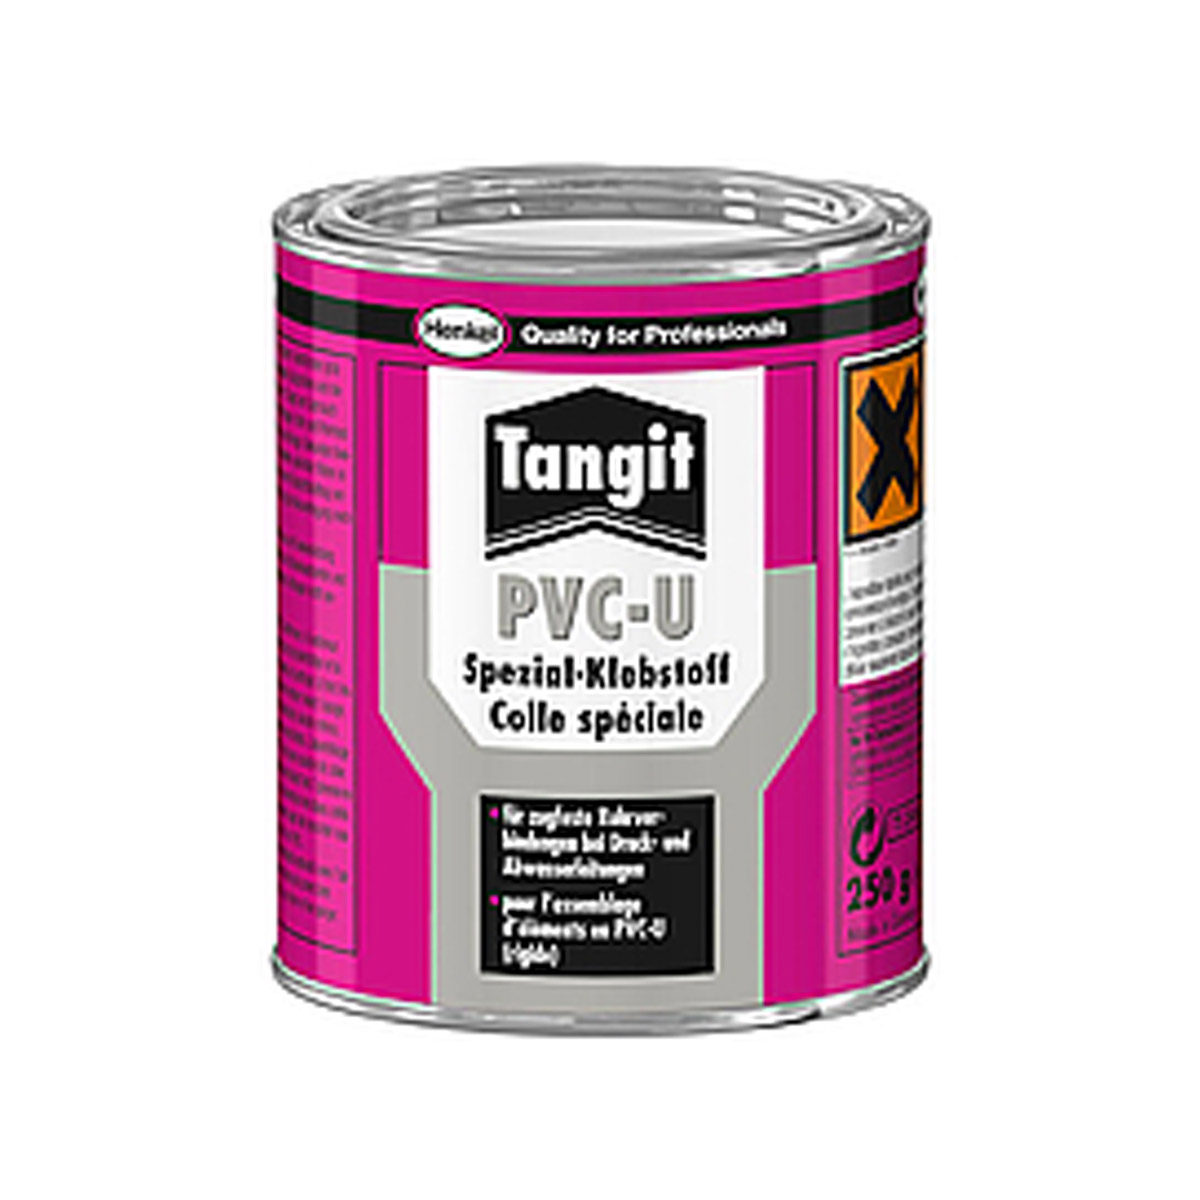 Tangit® PVC-U special adhesive with brush 250g Tangit® PVC-U special adhesive with brush 250g